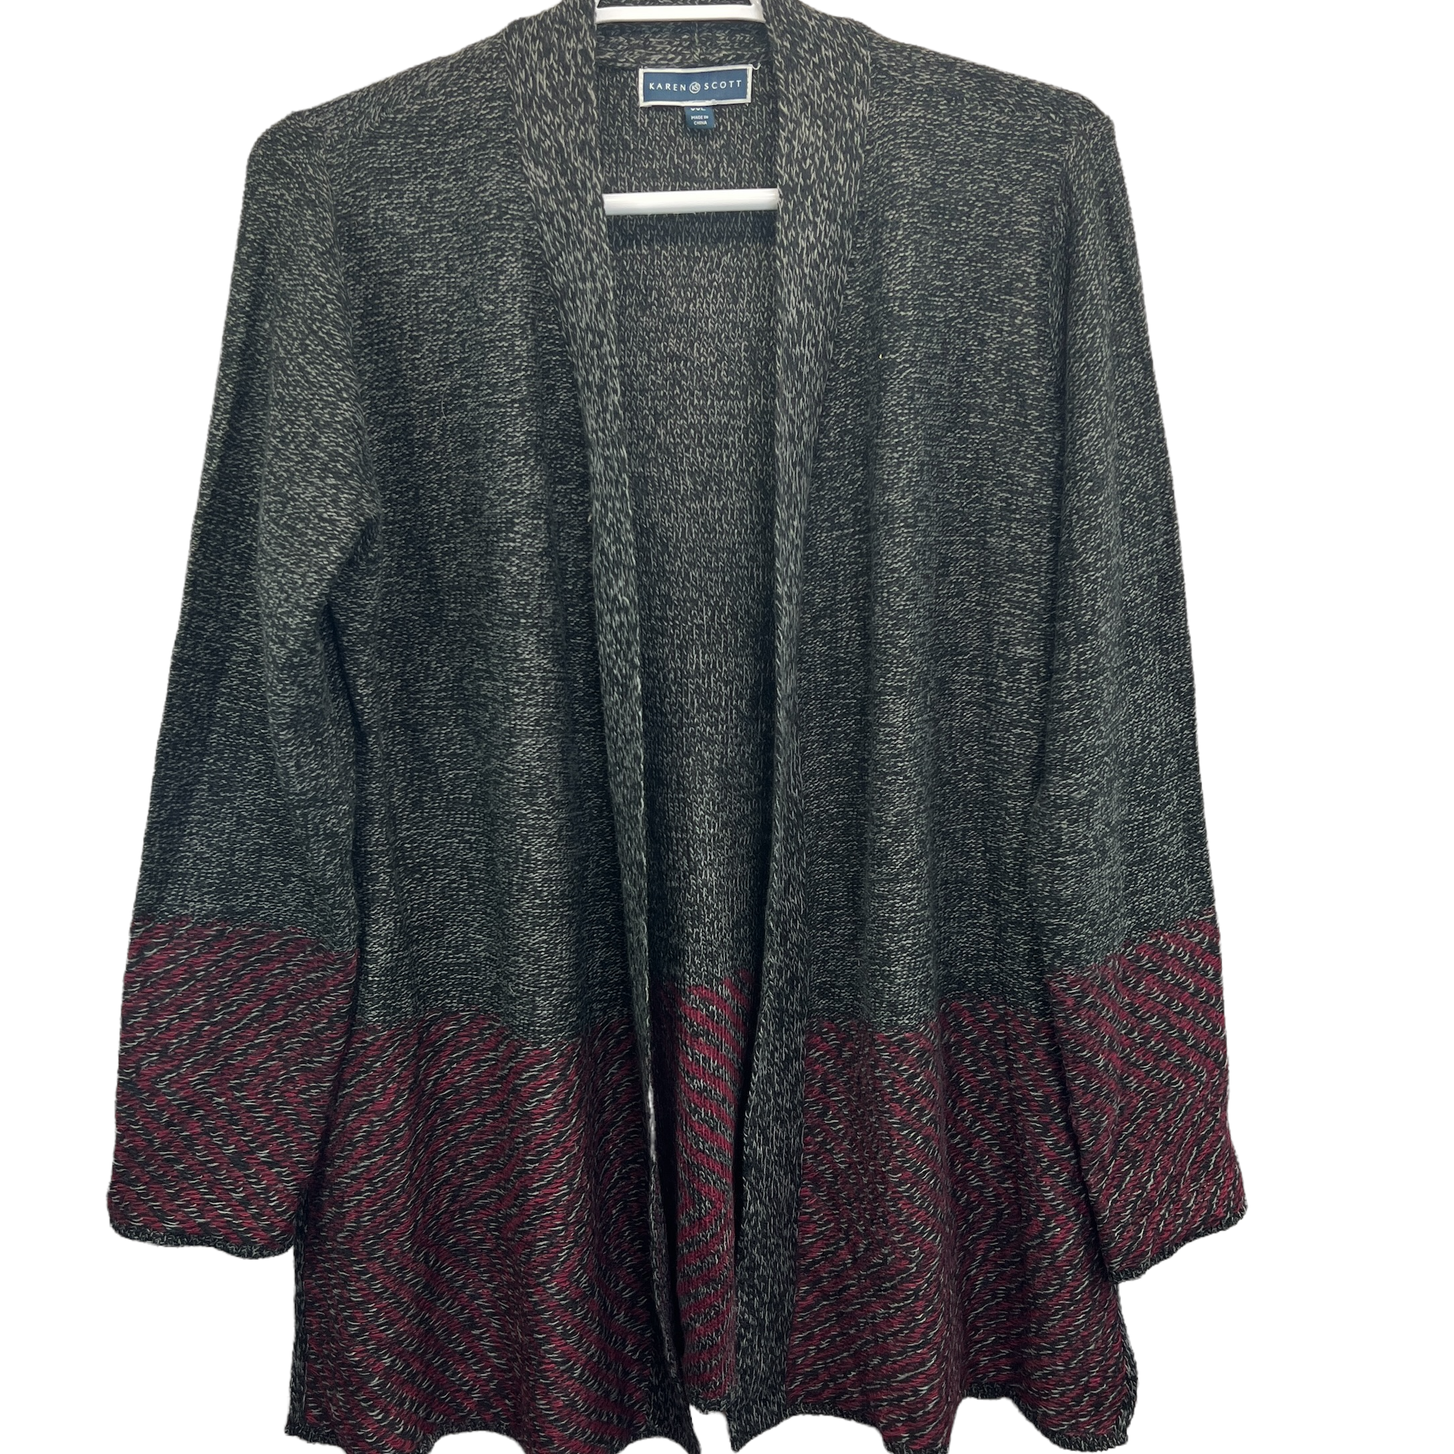 Primary image for Karen Scott Cardigan Sweater Black Size XXL Open Front Knit Plus Size Cozy